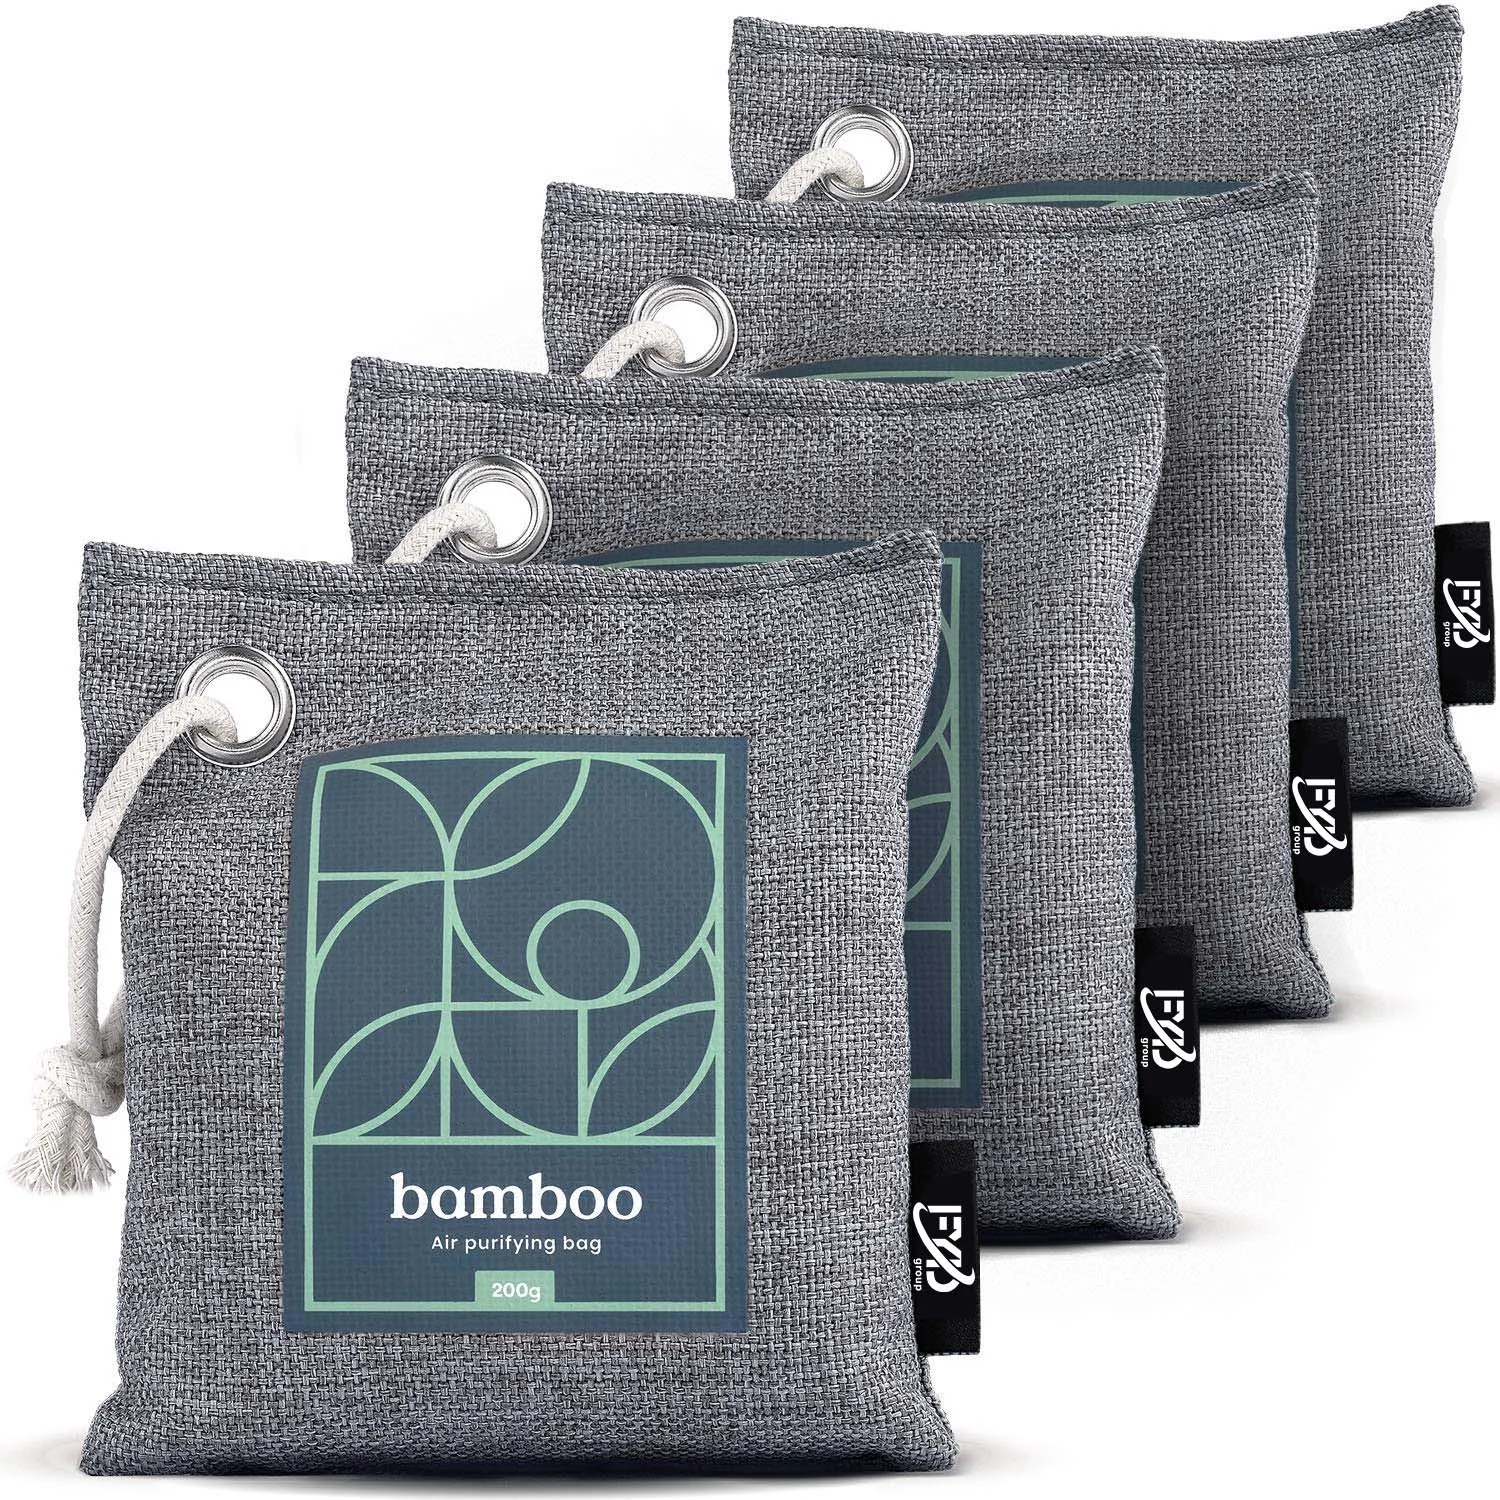 

Bamboo Charcoal Shoe Deodorizer Air Purifying Bag - Natural Odor Eliminator, Blue